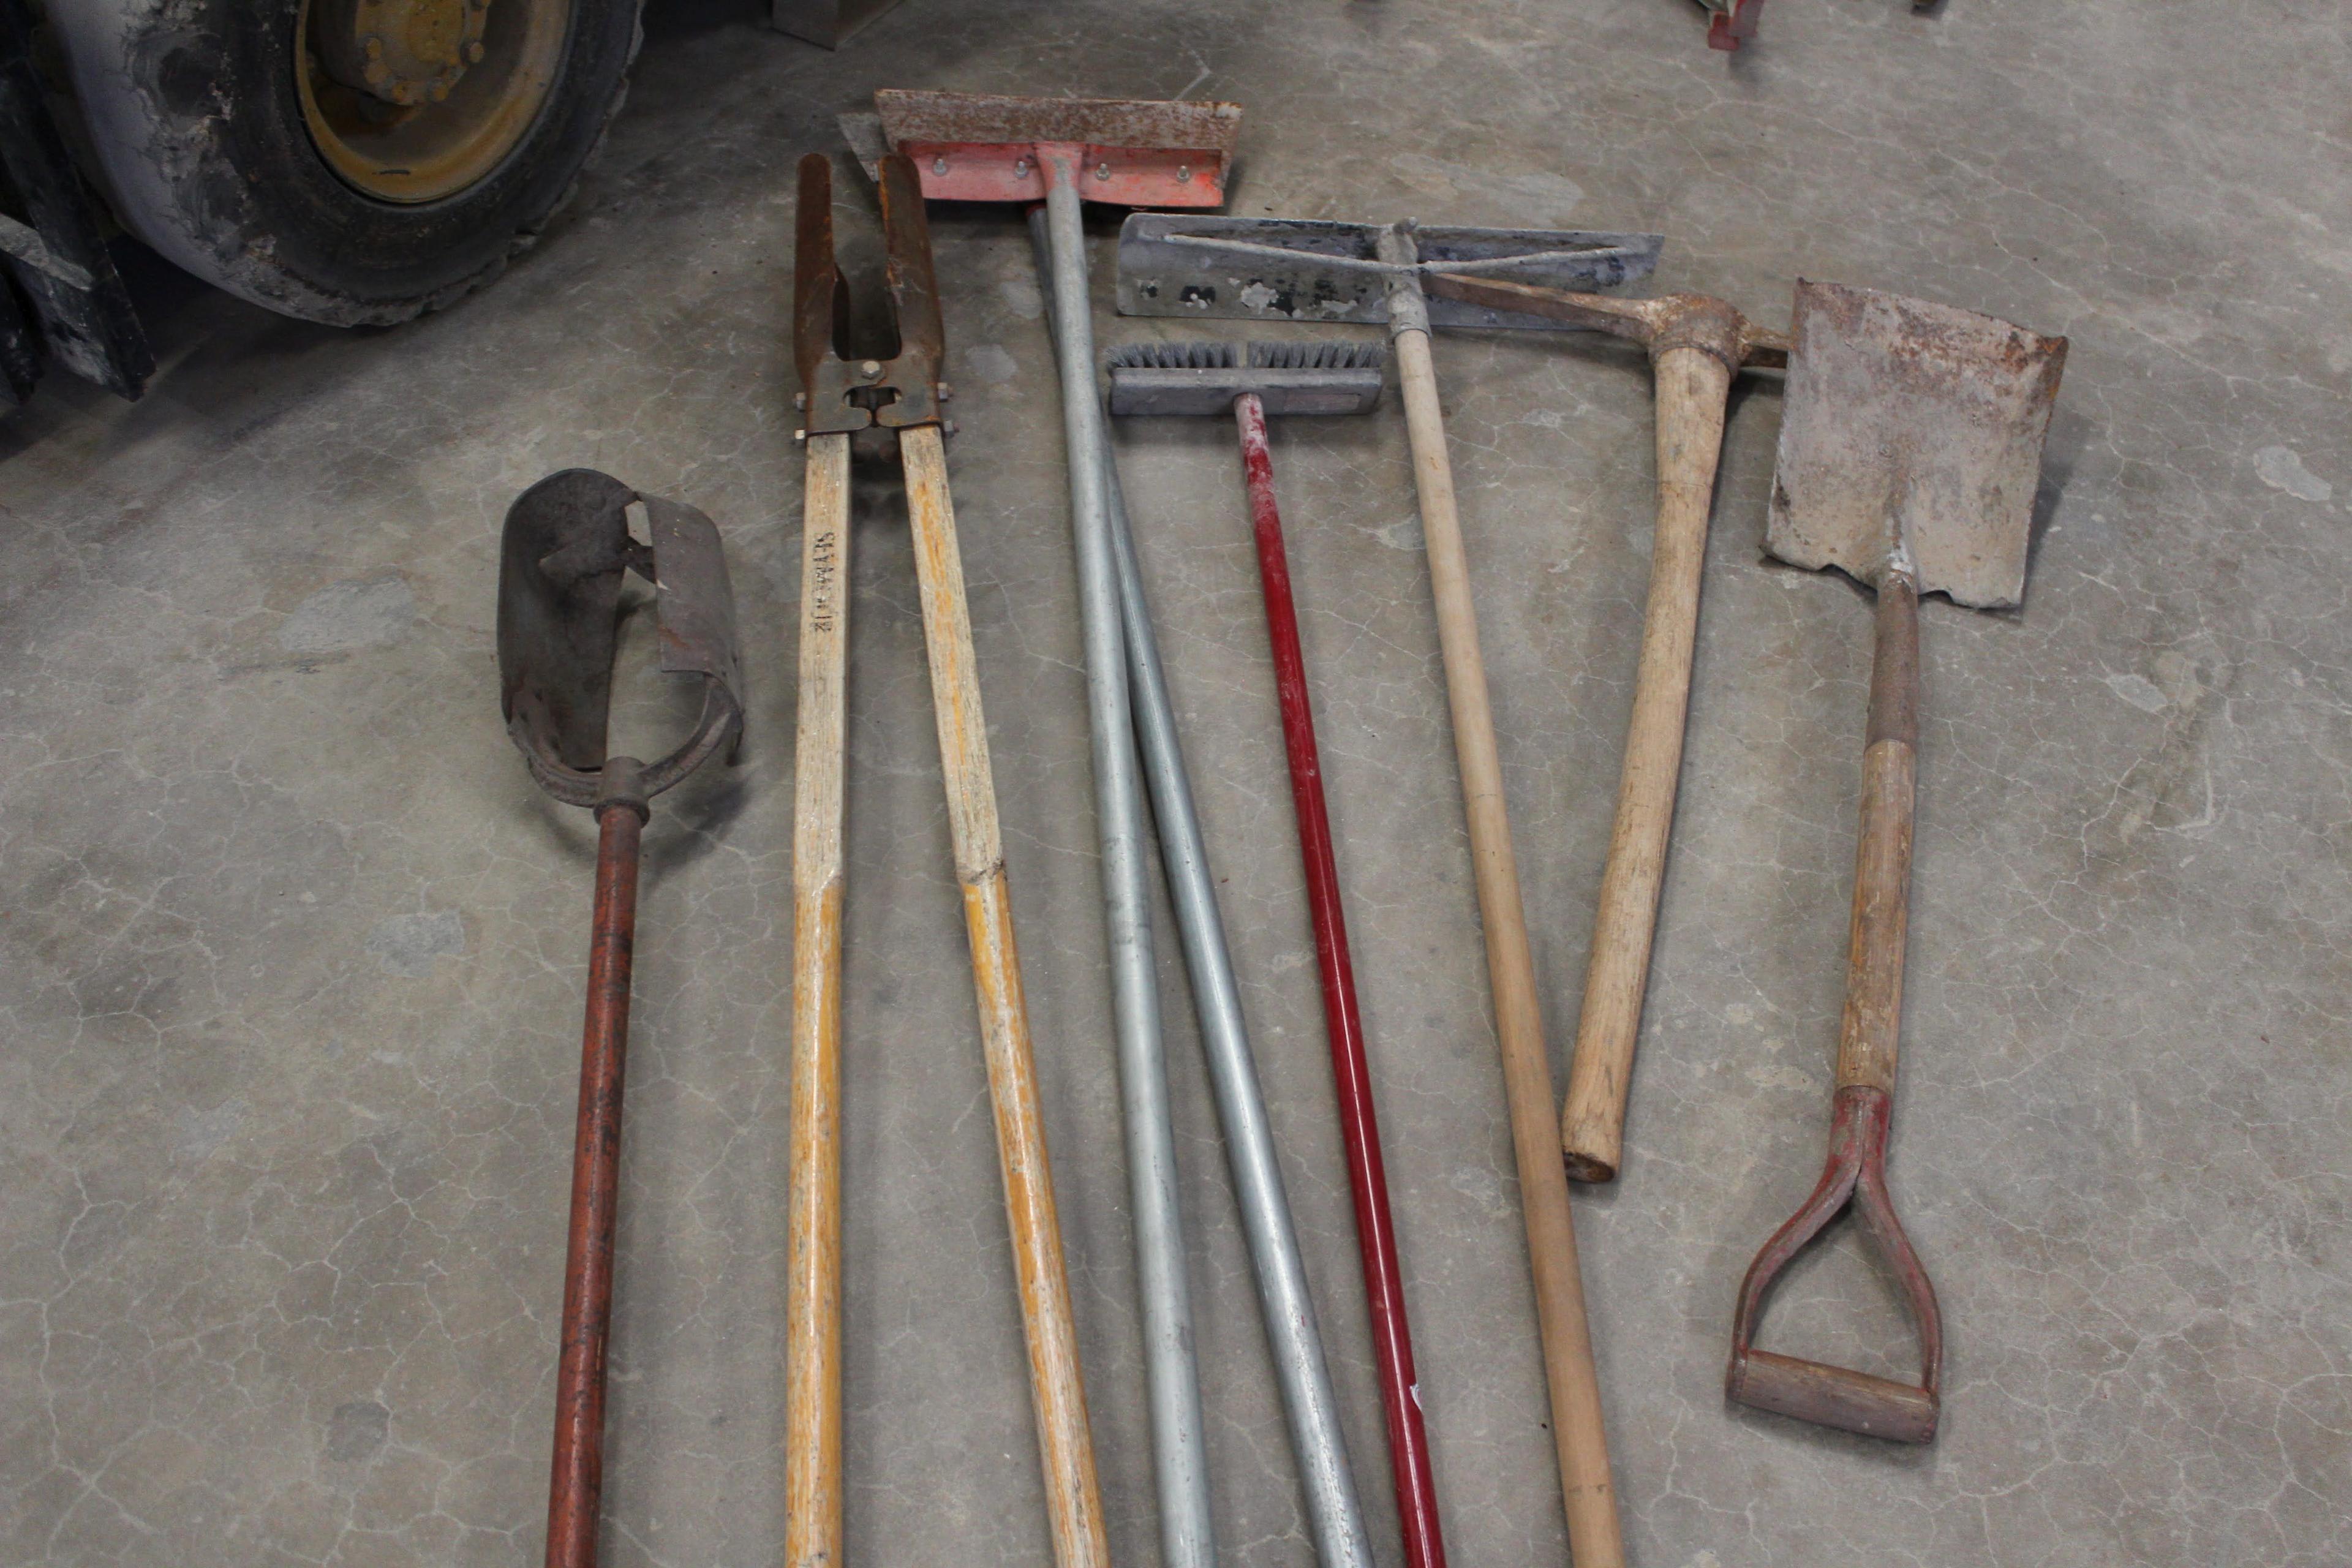 Assorted Lot of Gardening Tools